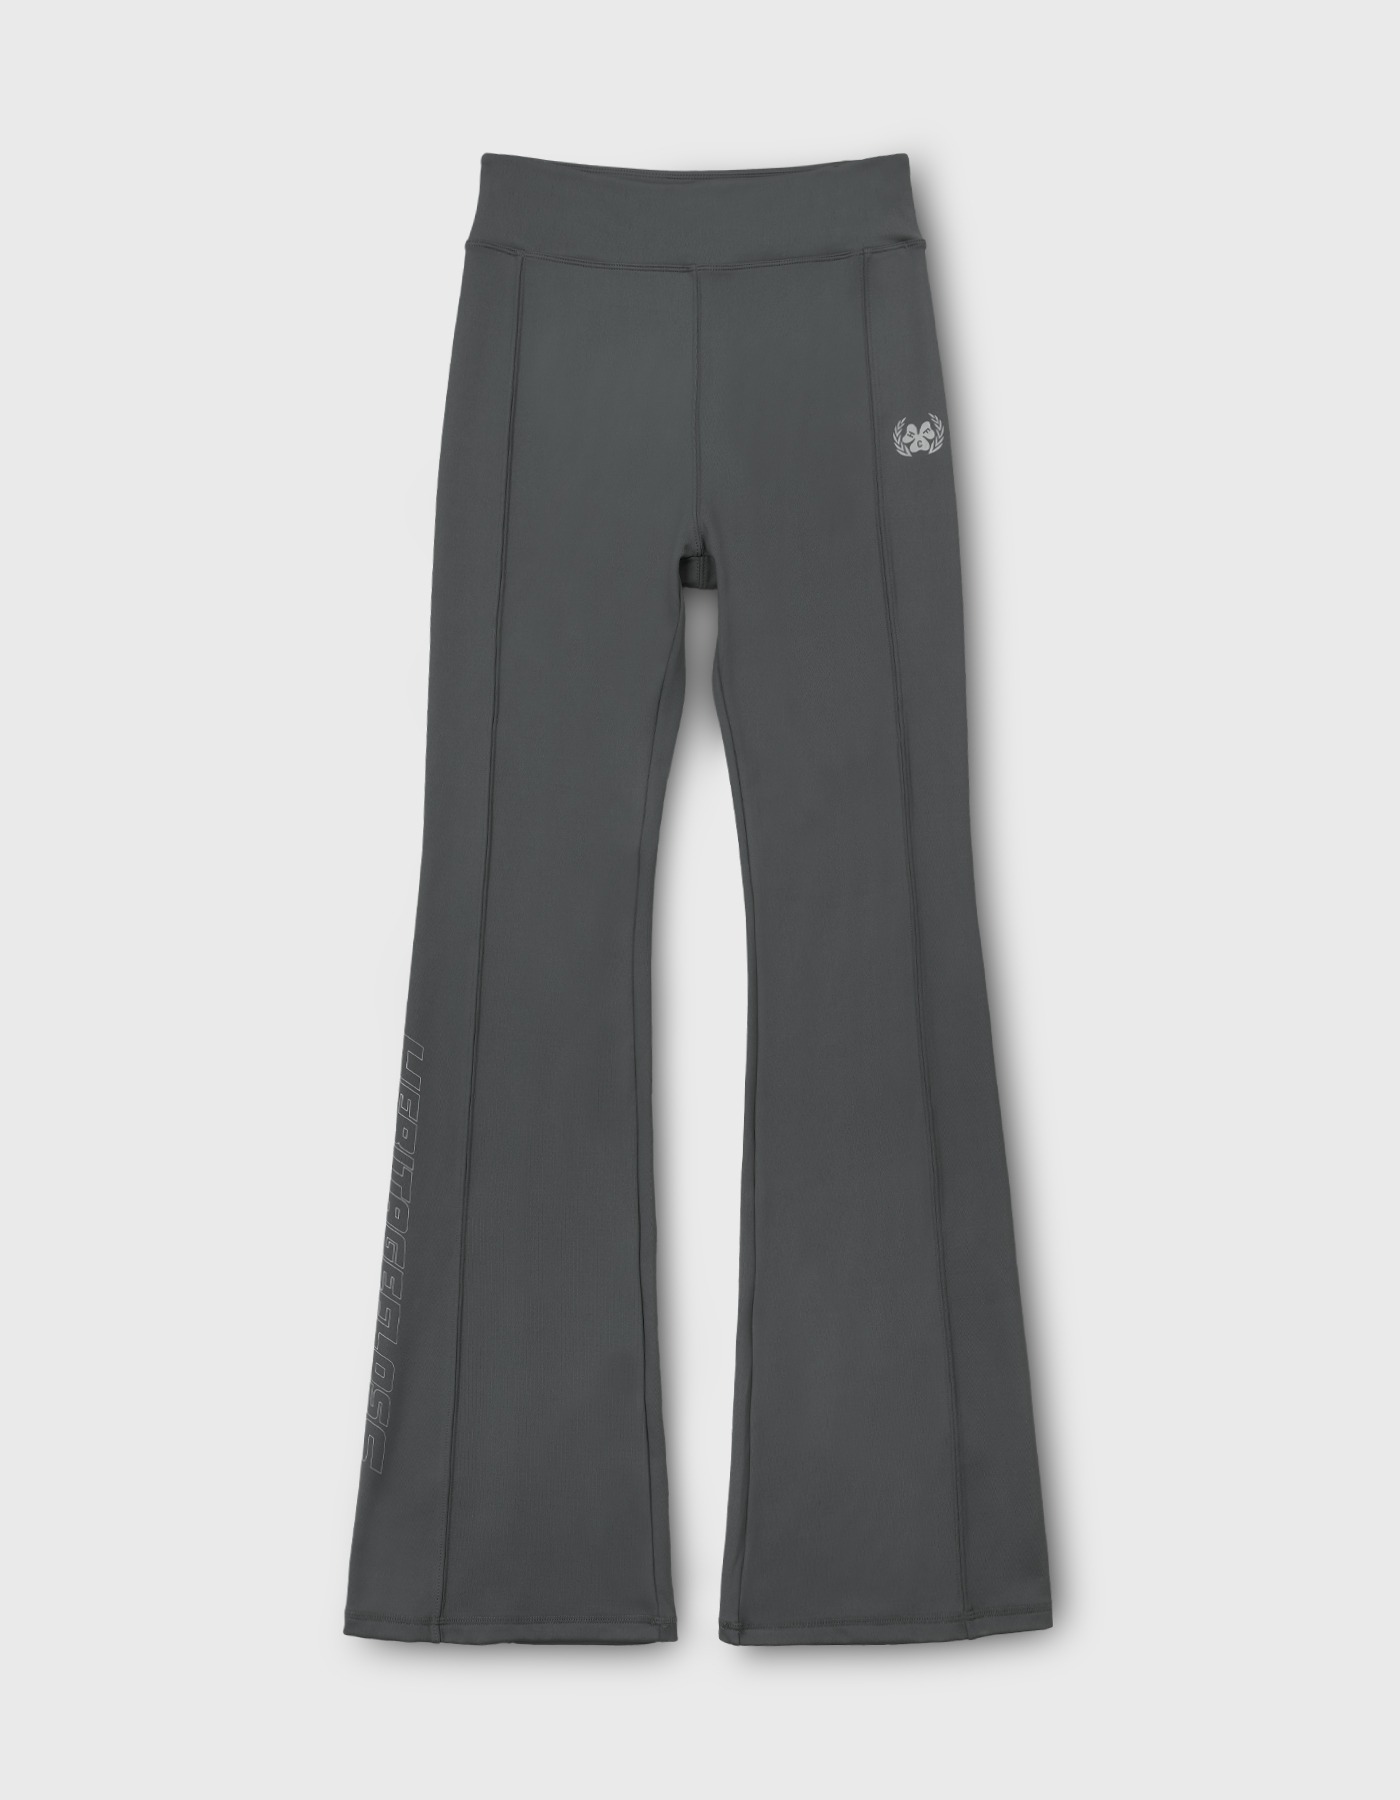 HIGH-RISE FLARED PANTS / Grey